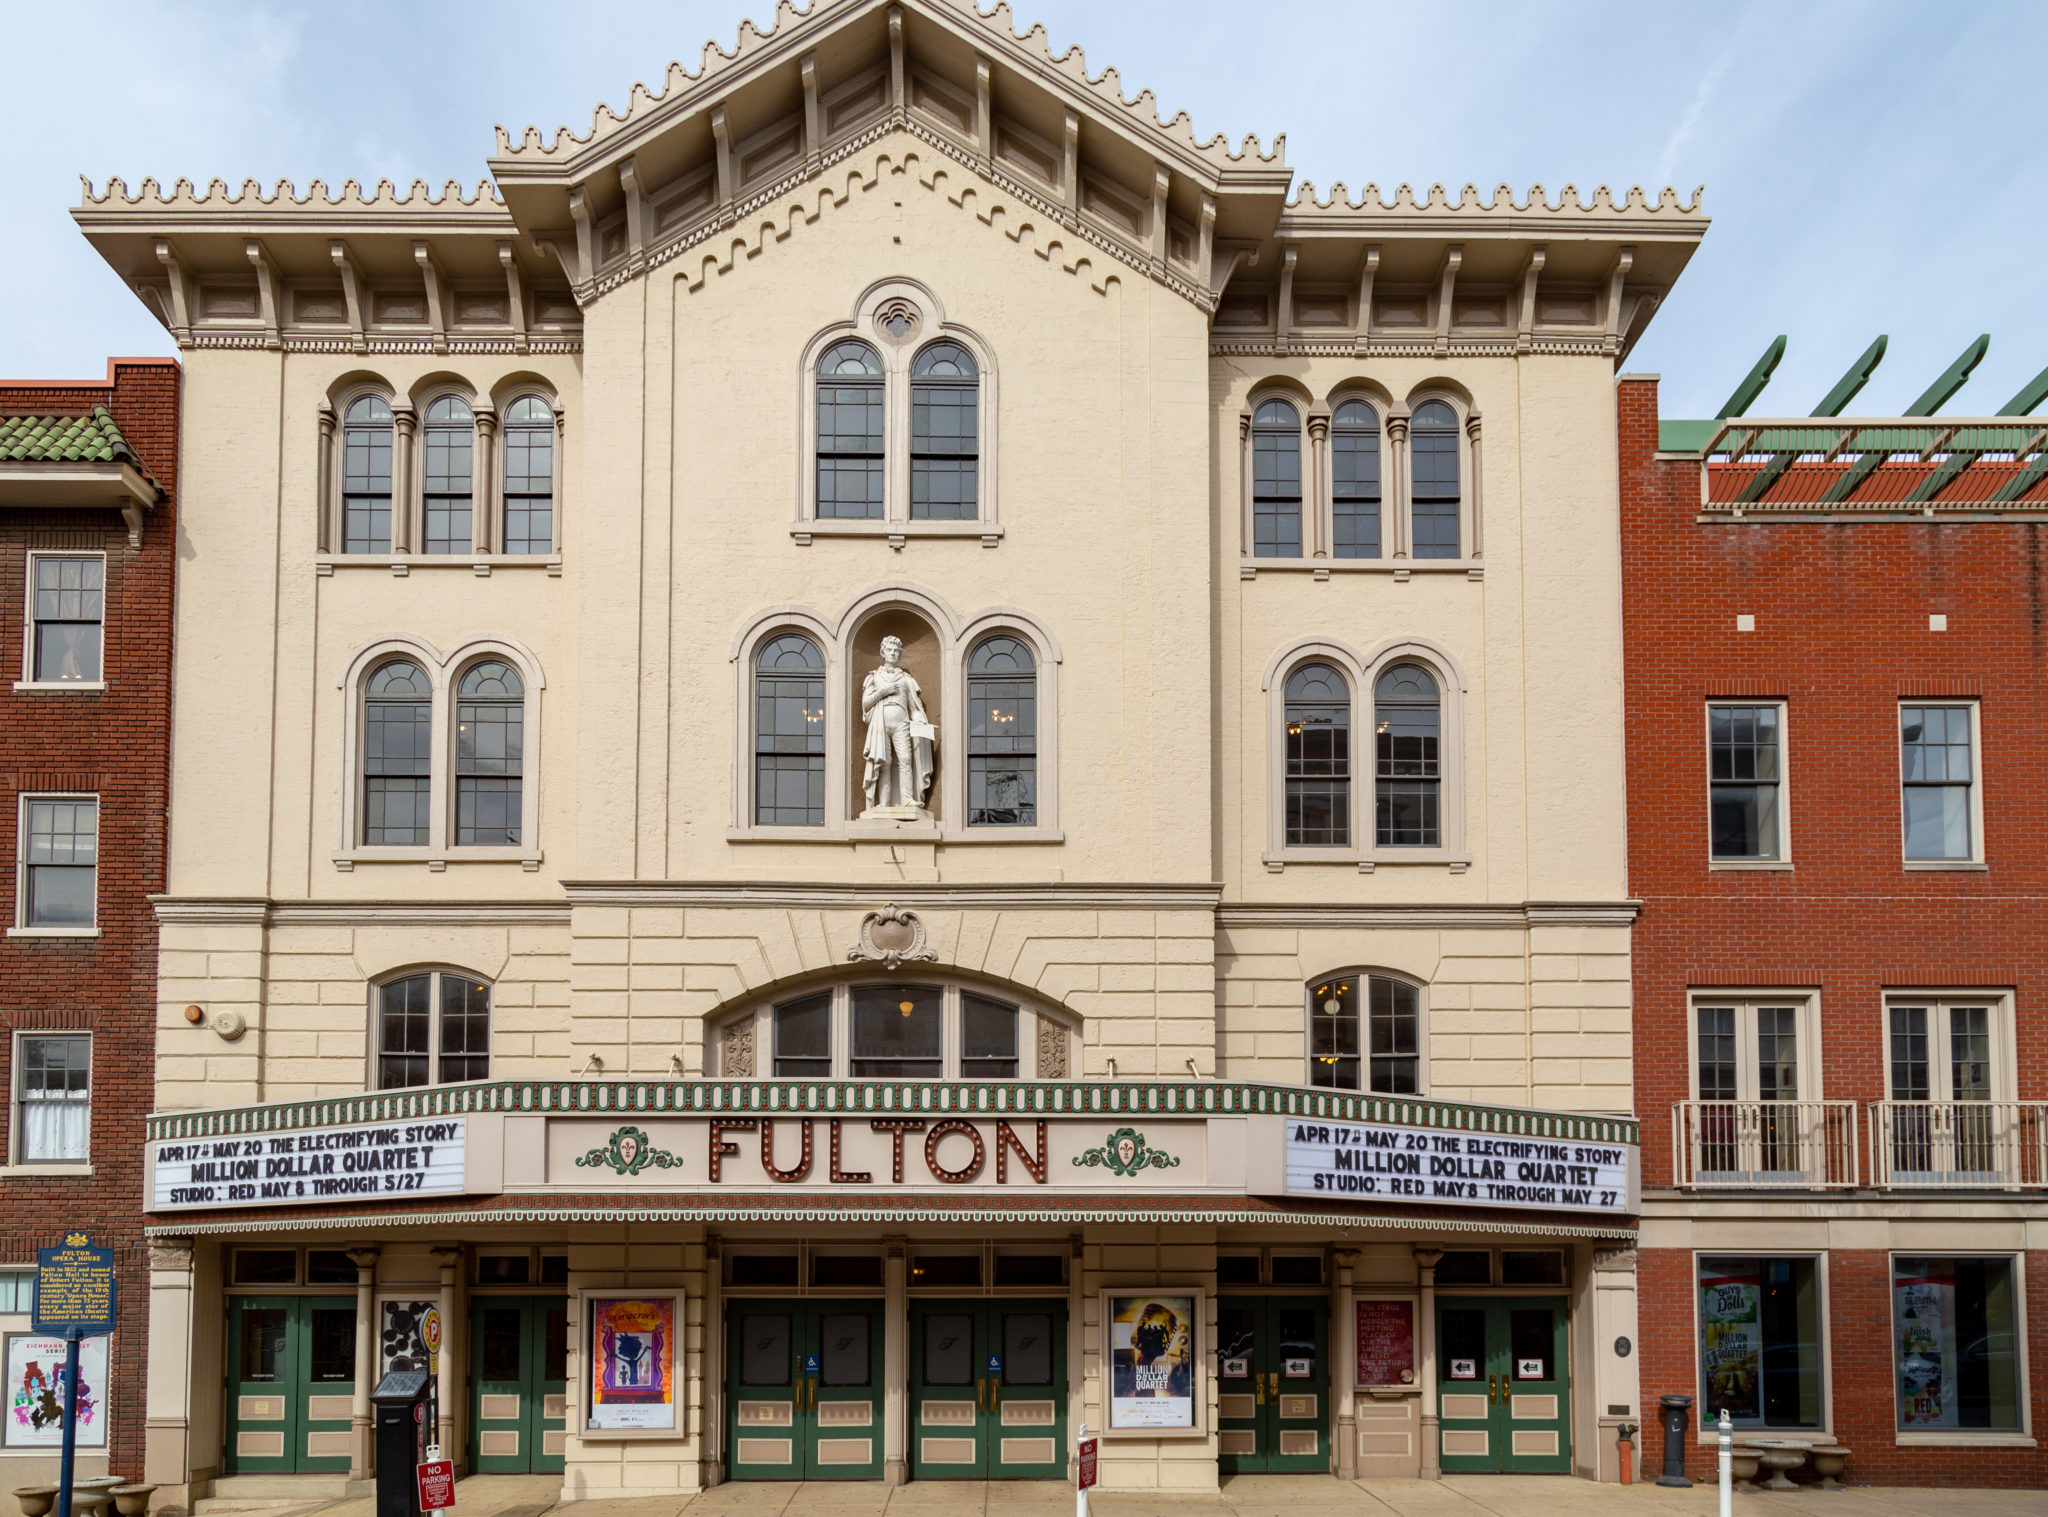 Celebrating the Fulton Theater Joyland Roofing